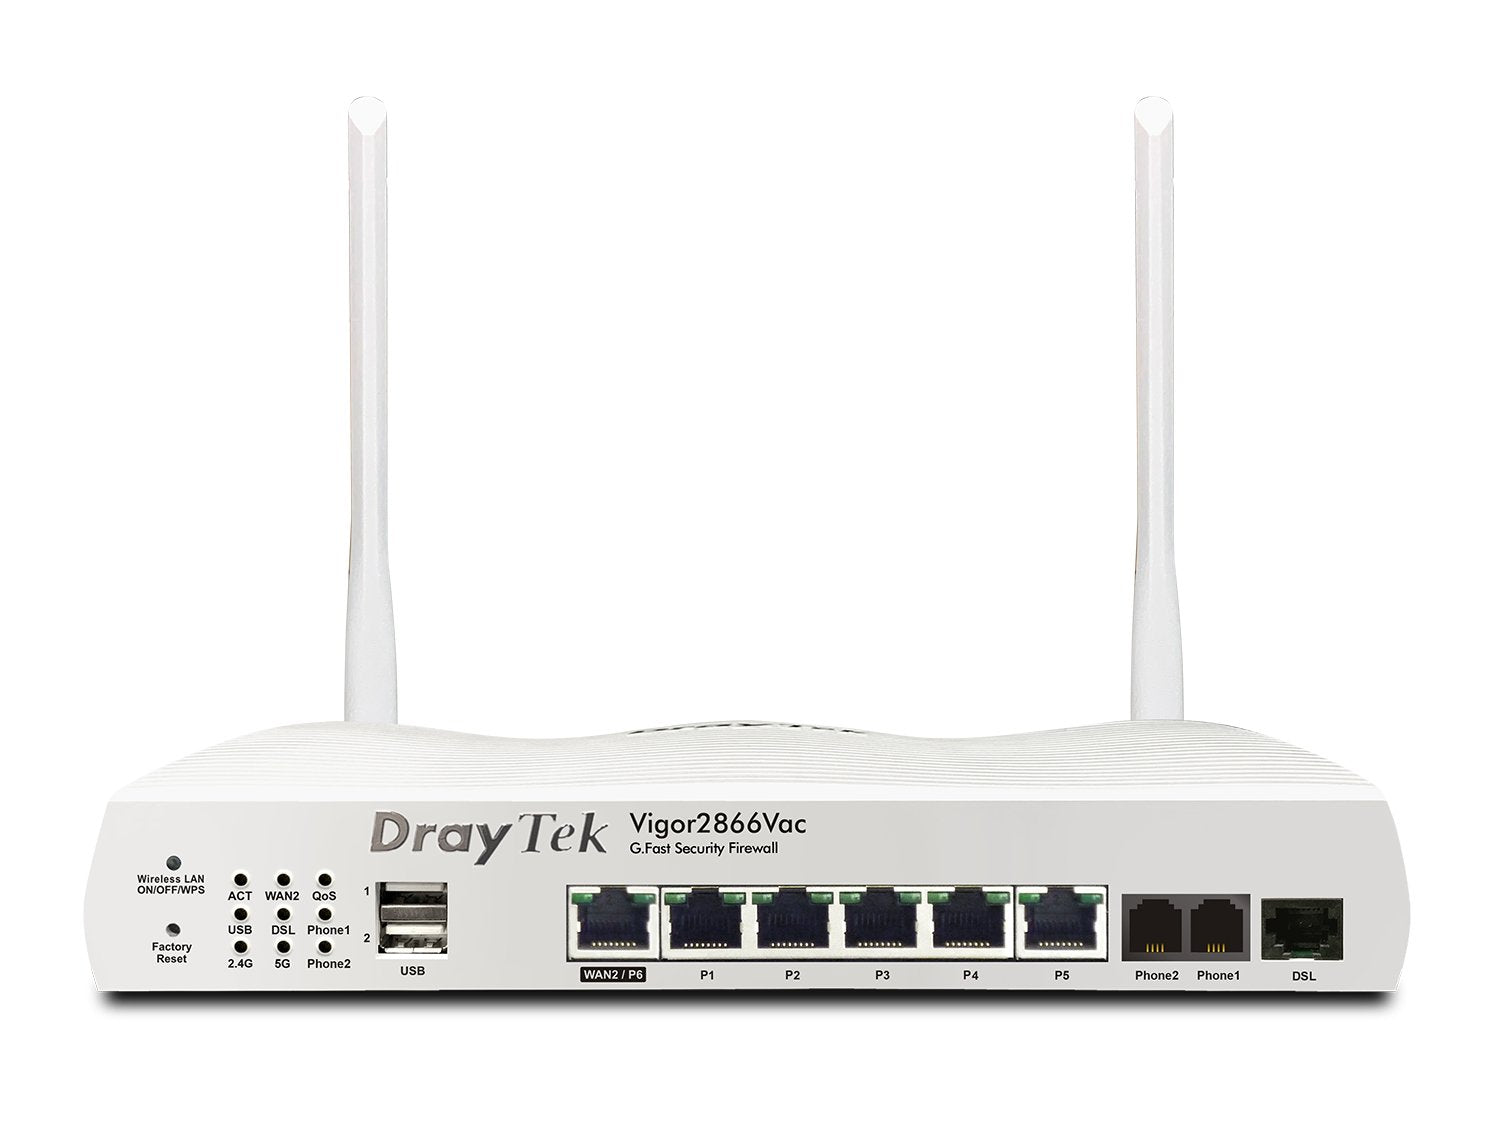 DrayTek Vigor 2866VAC Wi-Fi 6 VDSL VoIP WLAN Firewall Router Front View